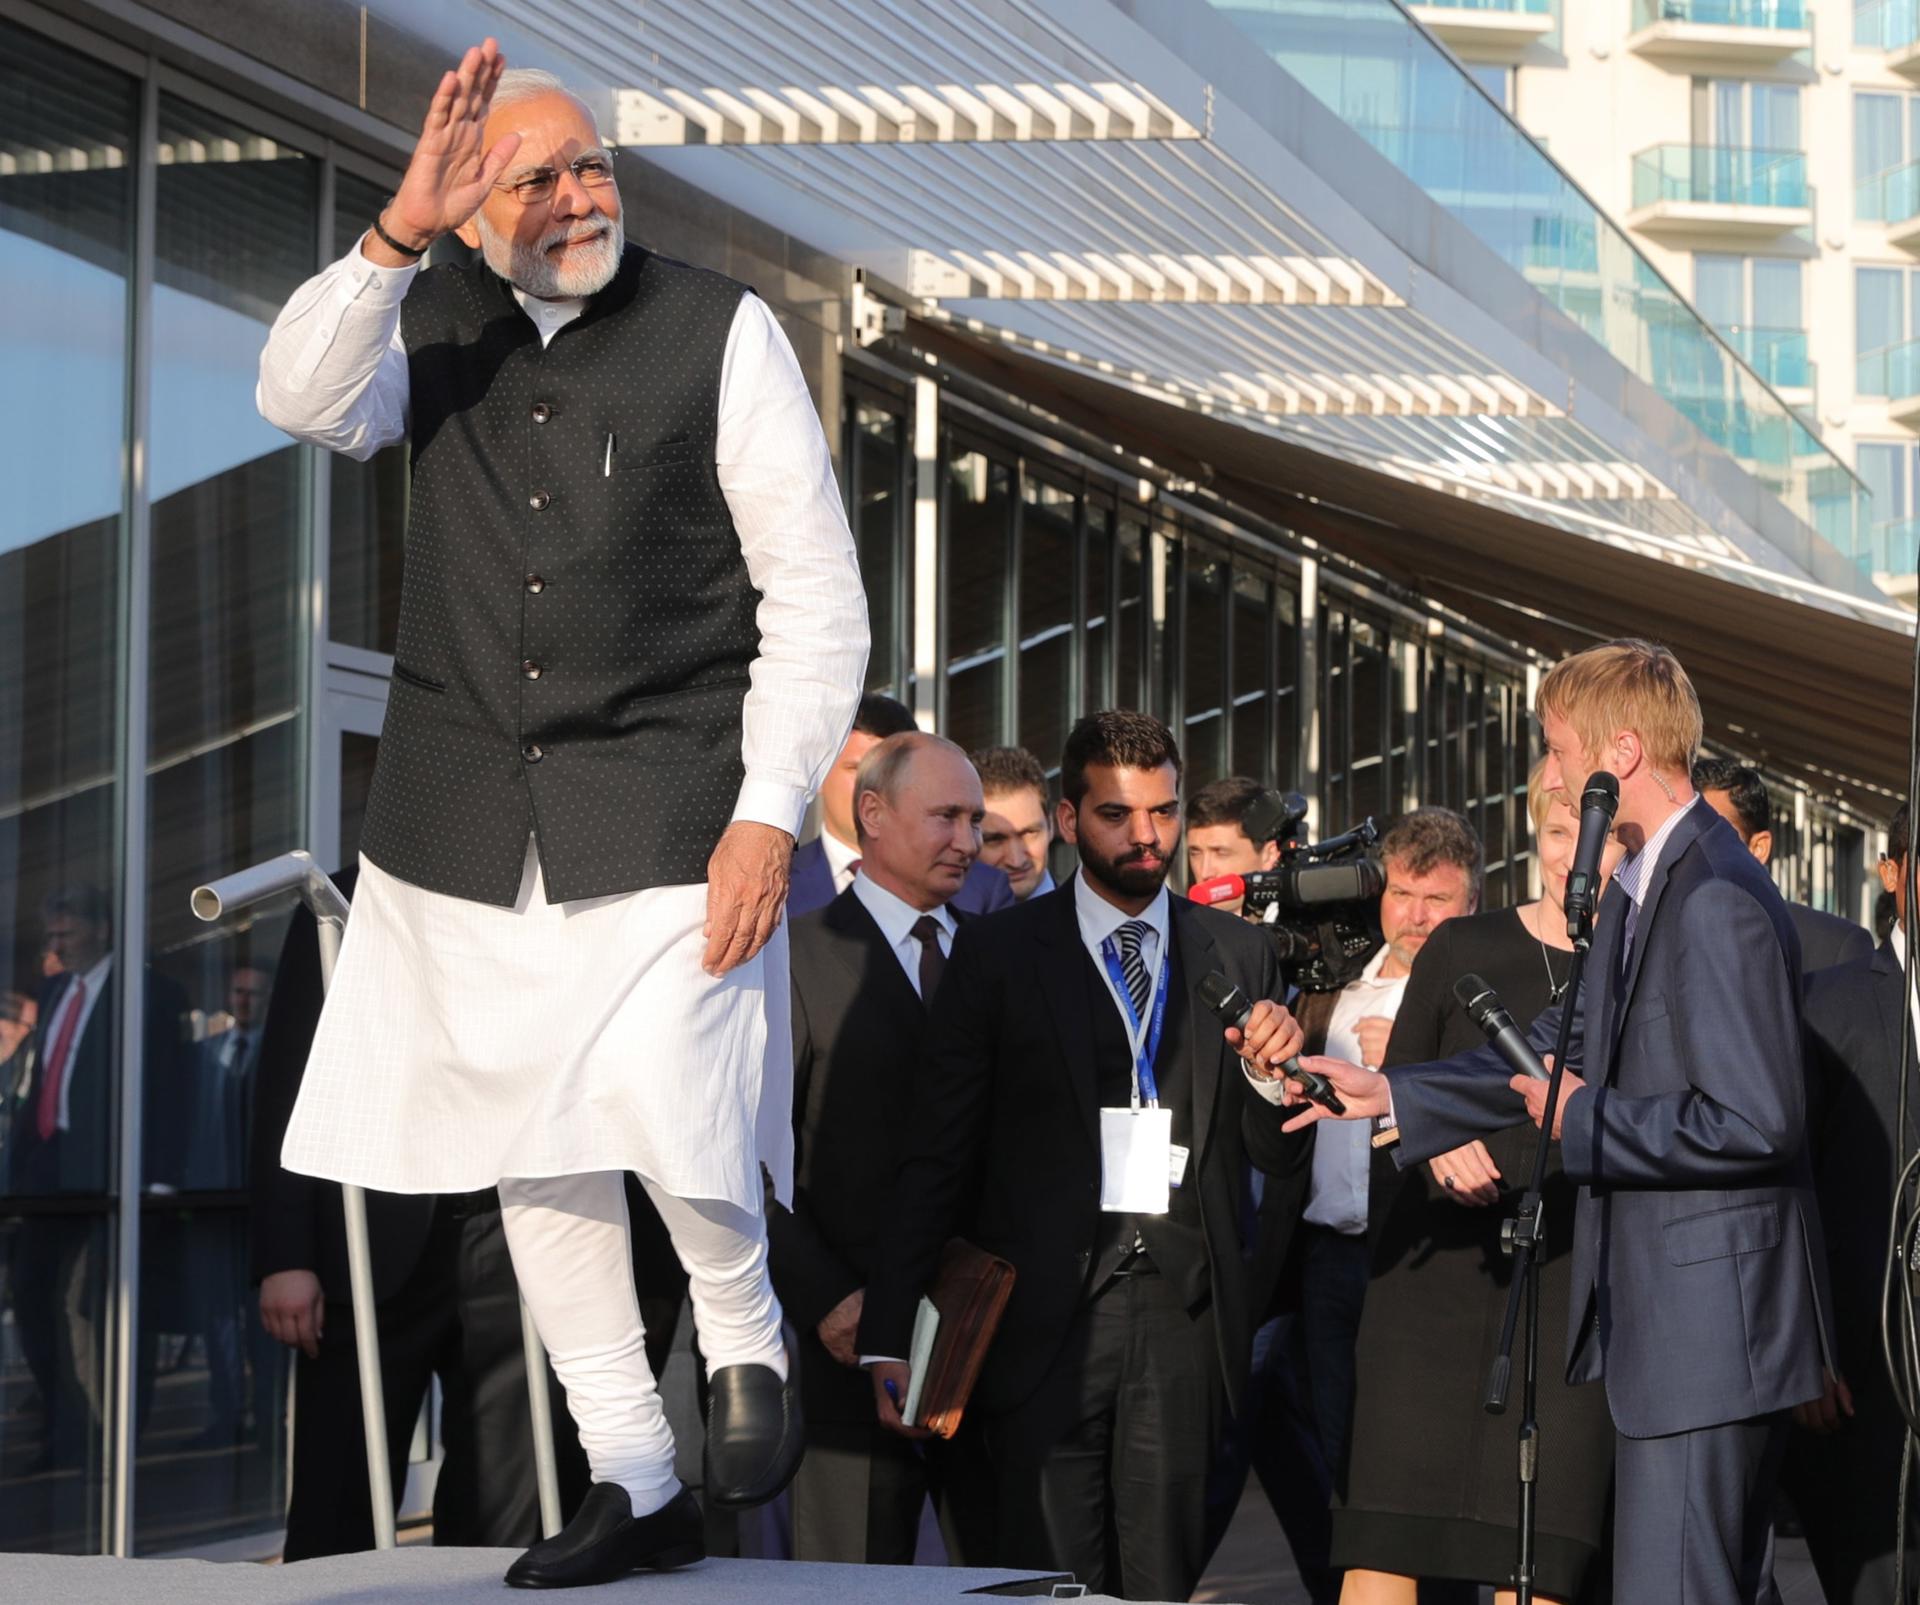 A file picture showing Indian Prime Minister Narendra Modi in Sochi, Russia. EPA/FILE/MICHAEL KLIMENTYEV / SPUTNIK / KREMLIN POOL MANDATORY CREDIT[MANDATORY CREDIT]